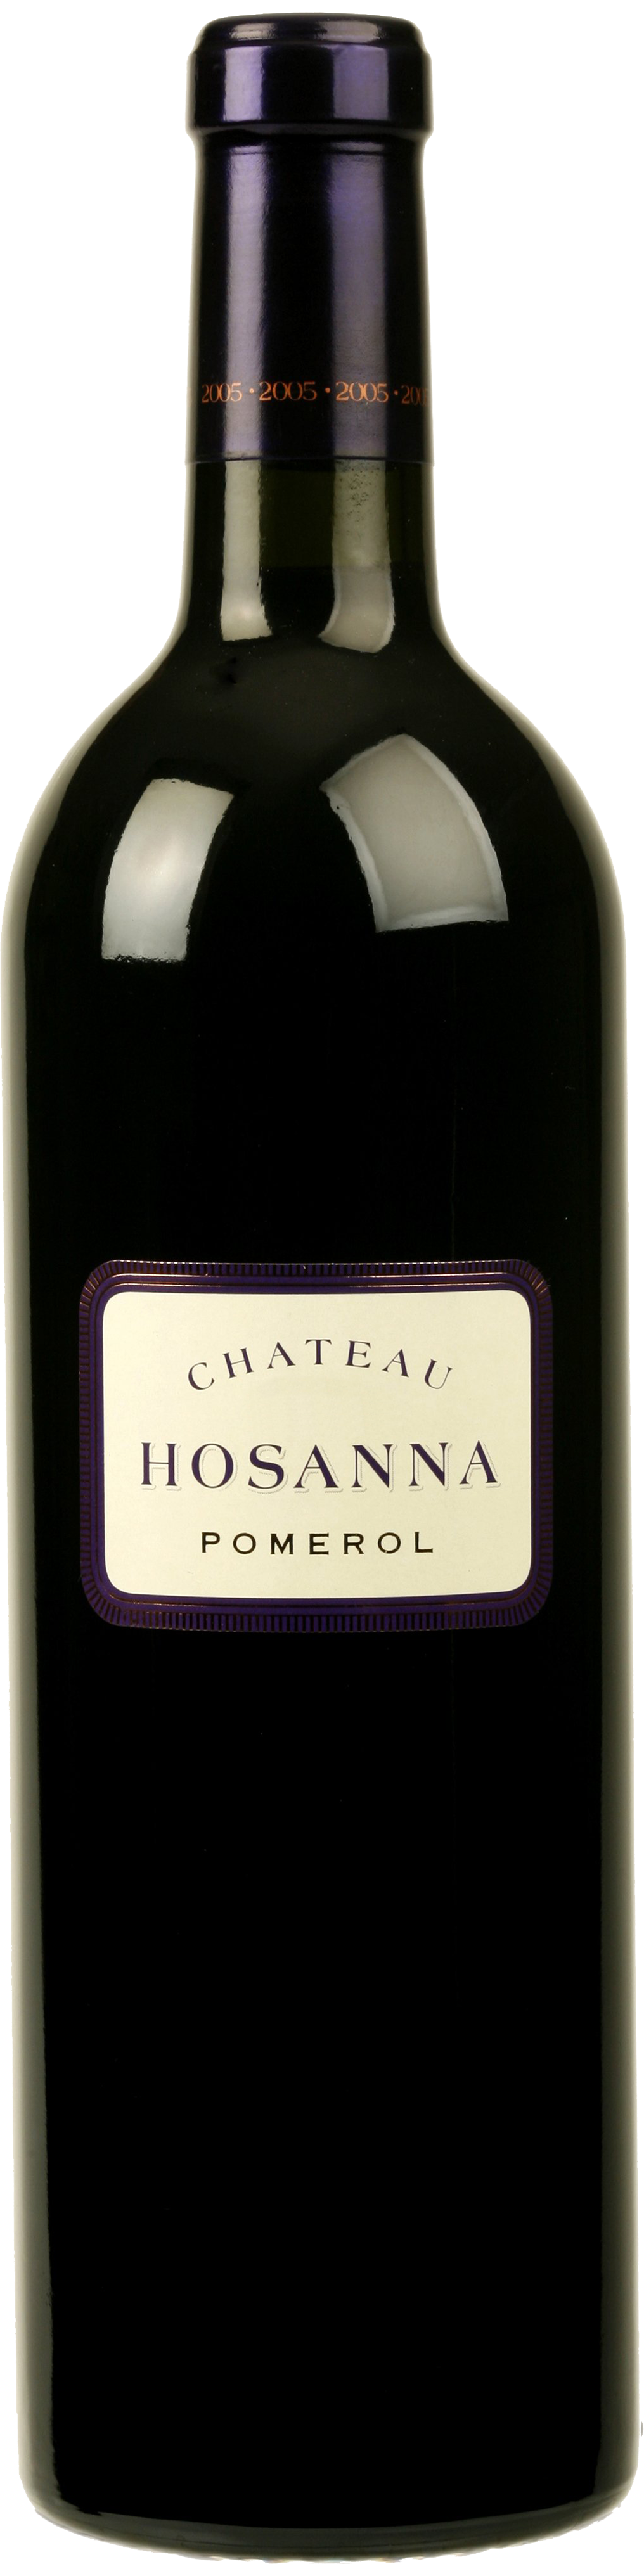 Bottle shot of 2007 Château Hosanna, Pomerol